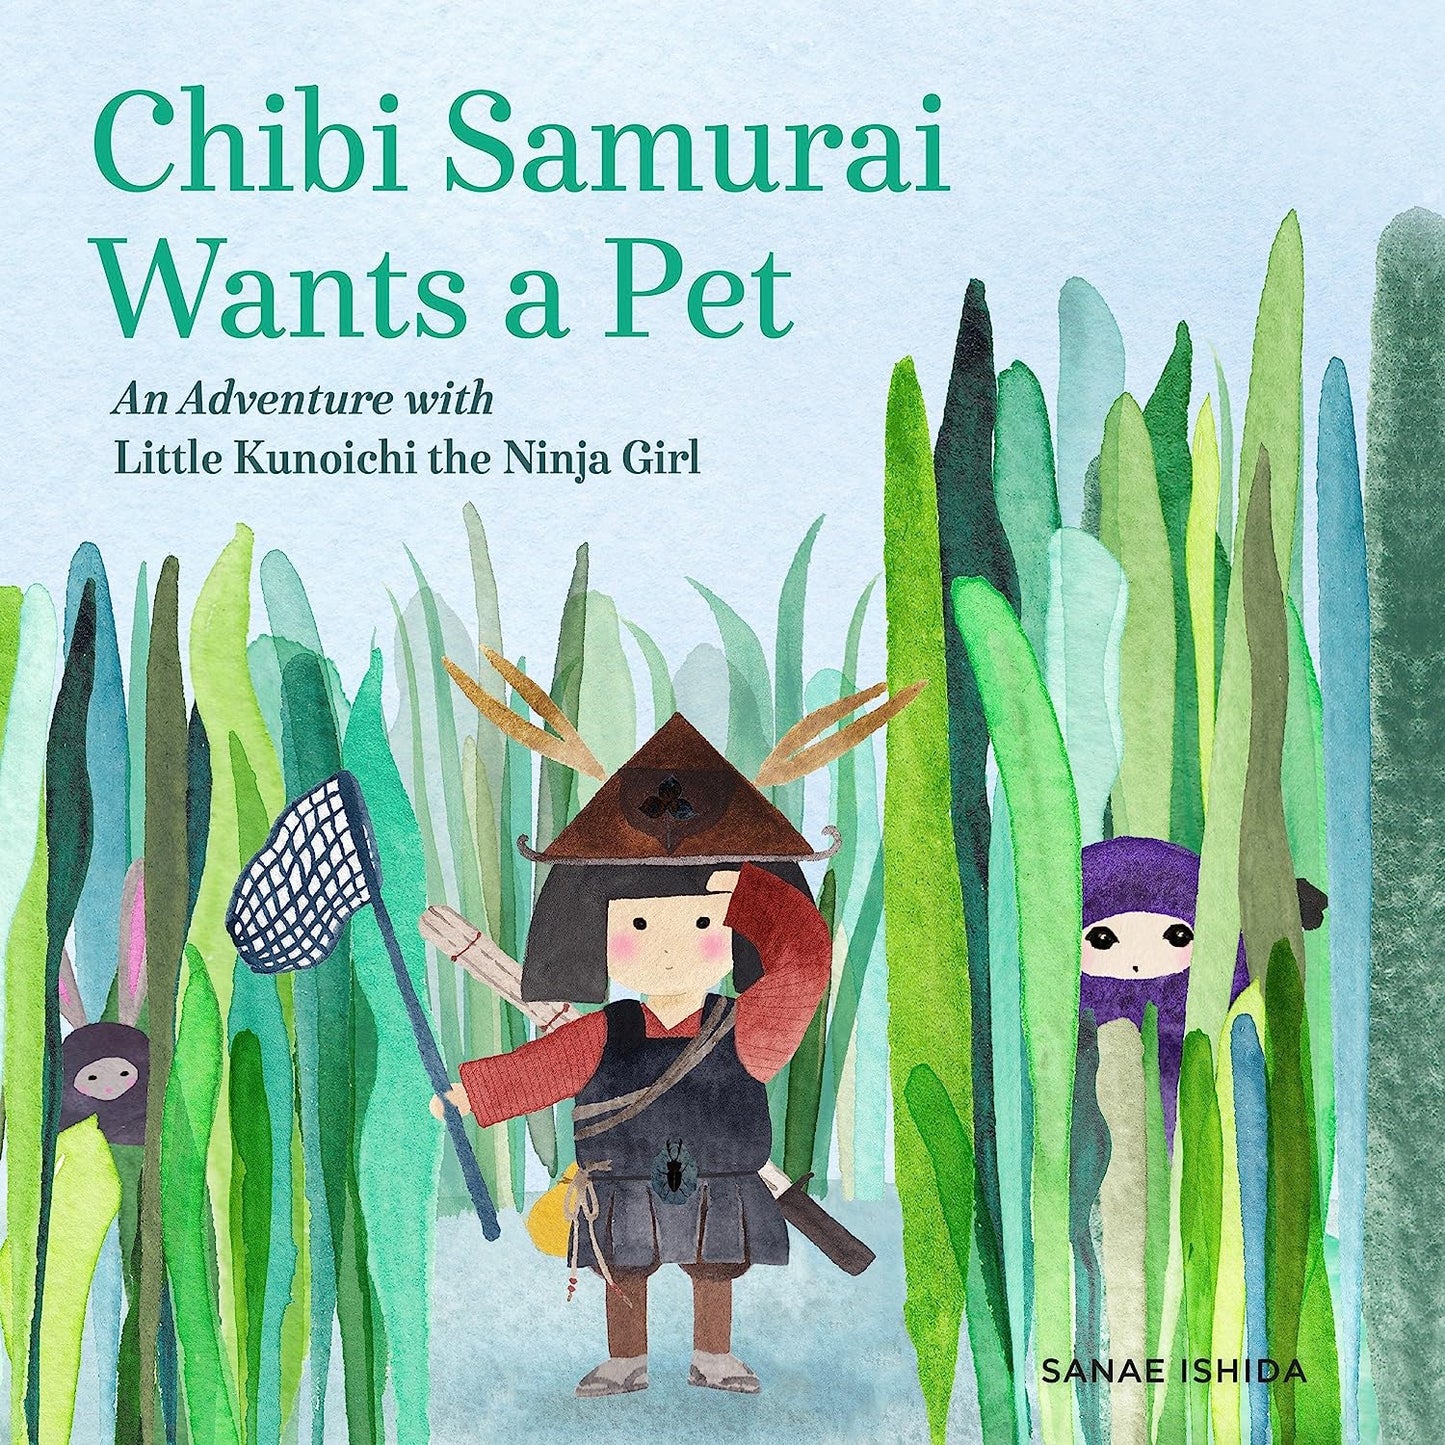 Chibi Samurai Wants a Pet: An Adventure with Little Kunoichi the Ninja Girl